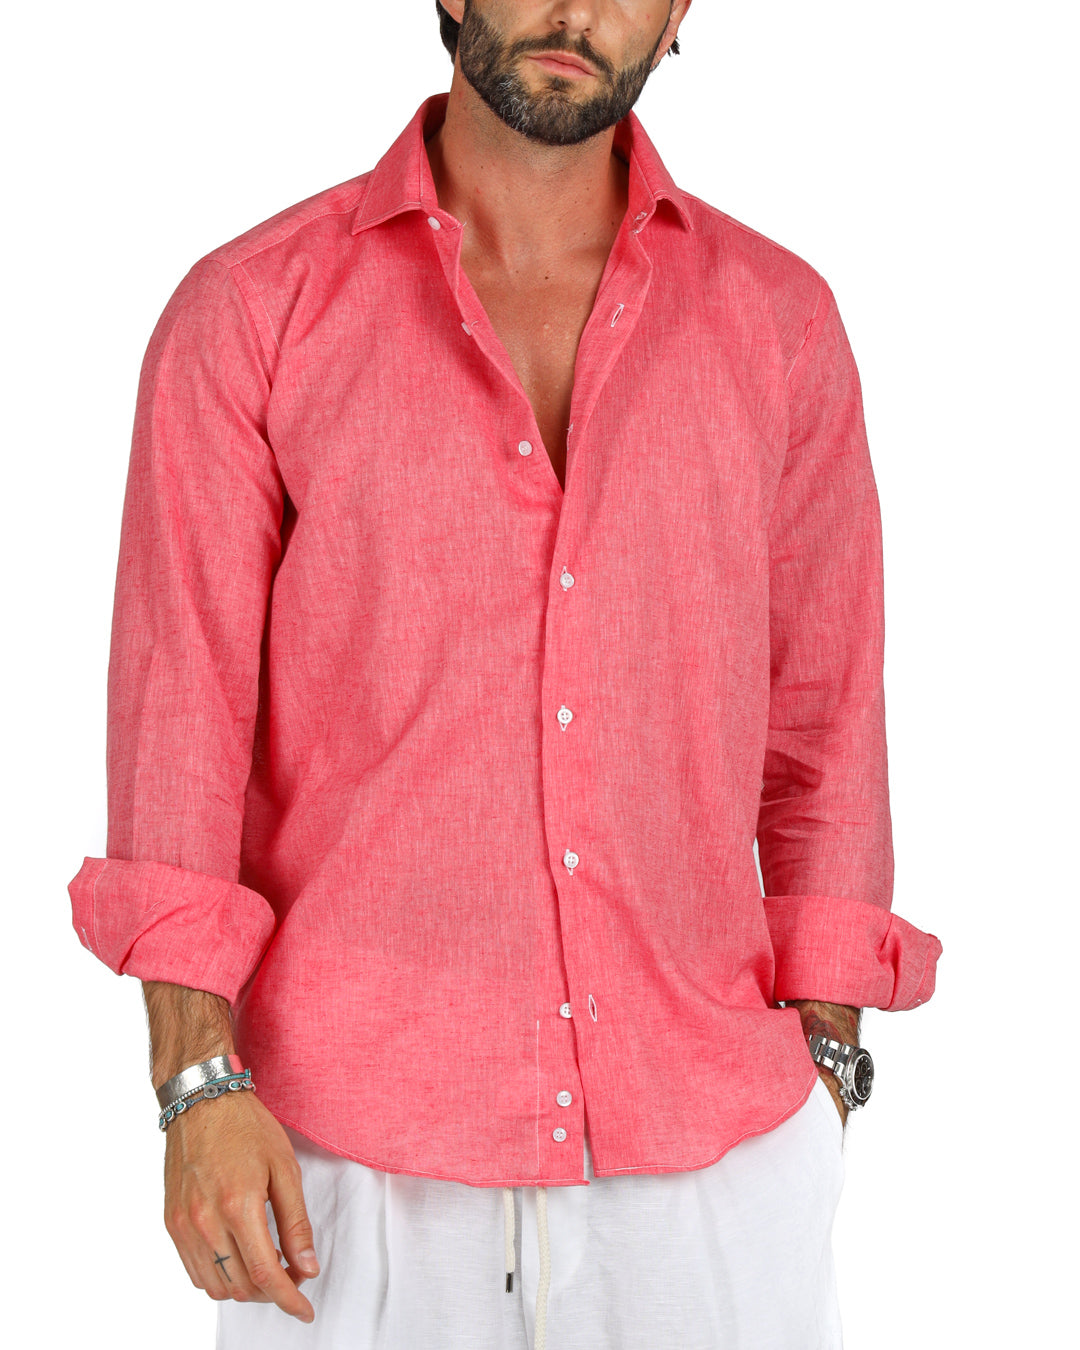 Praiano - Classic coral linen shirt